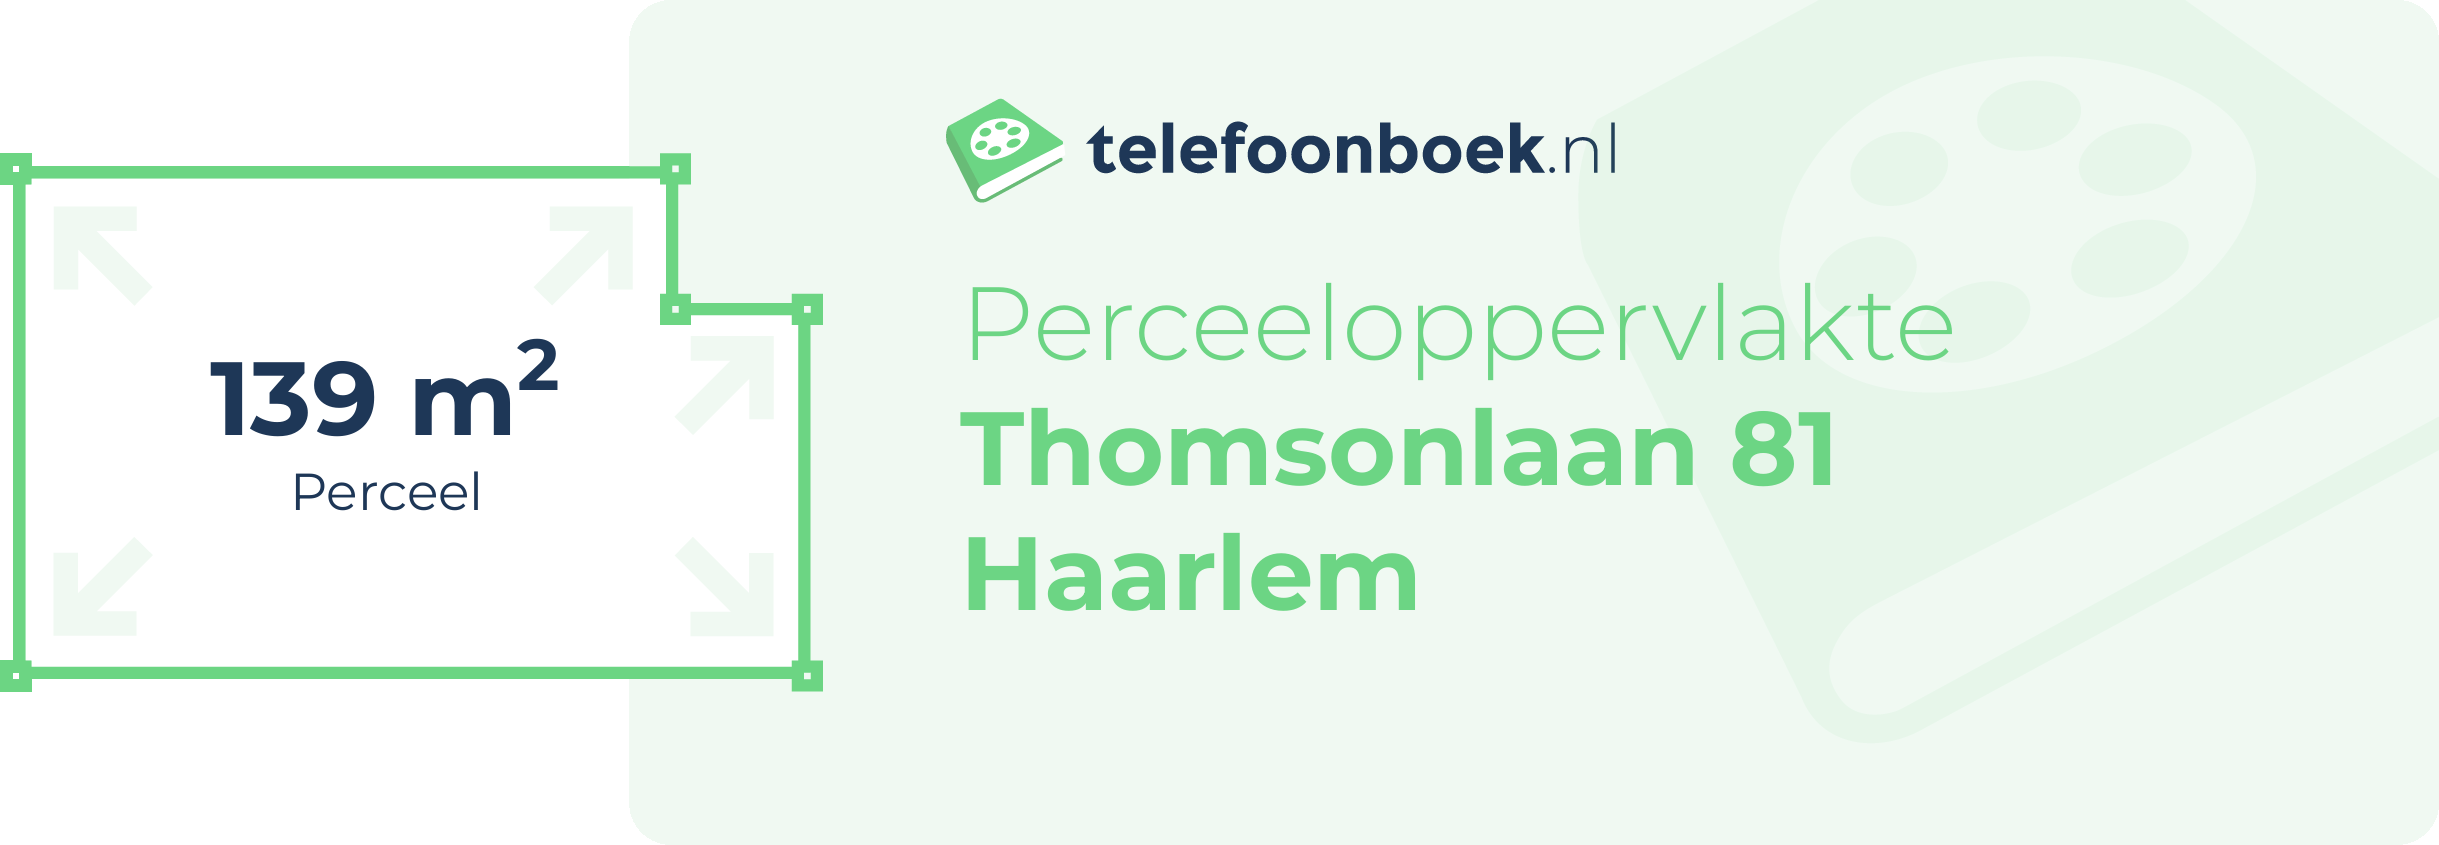 Perceeloppervlakte Thomsonlaan 81 Haarlem